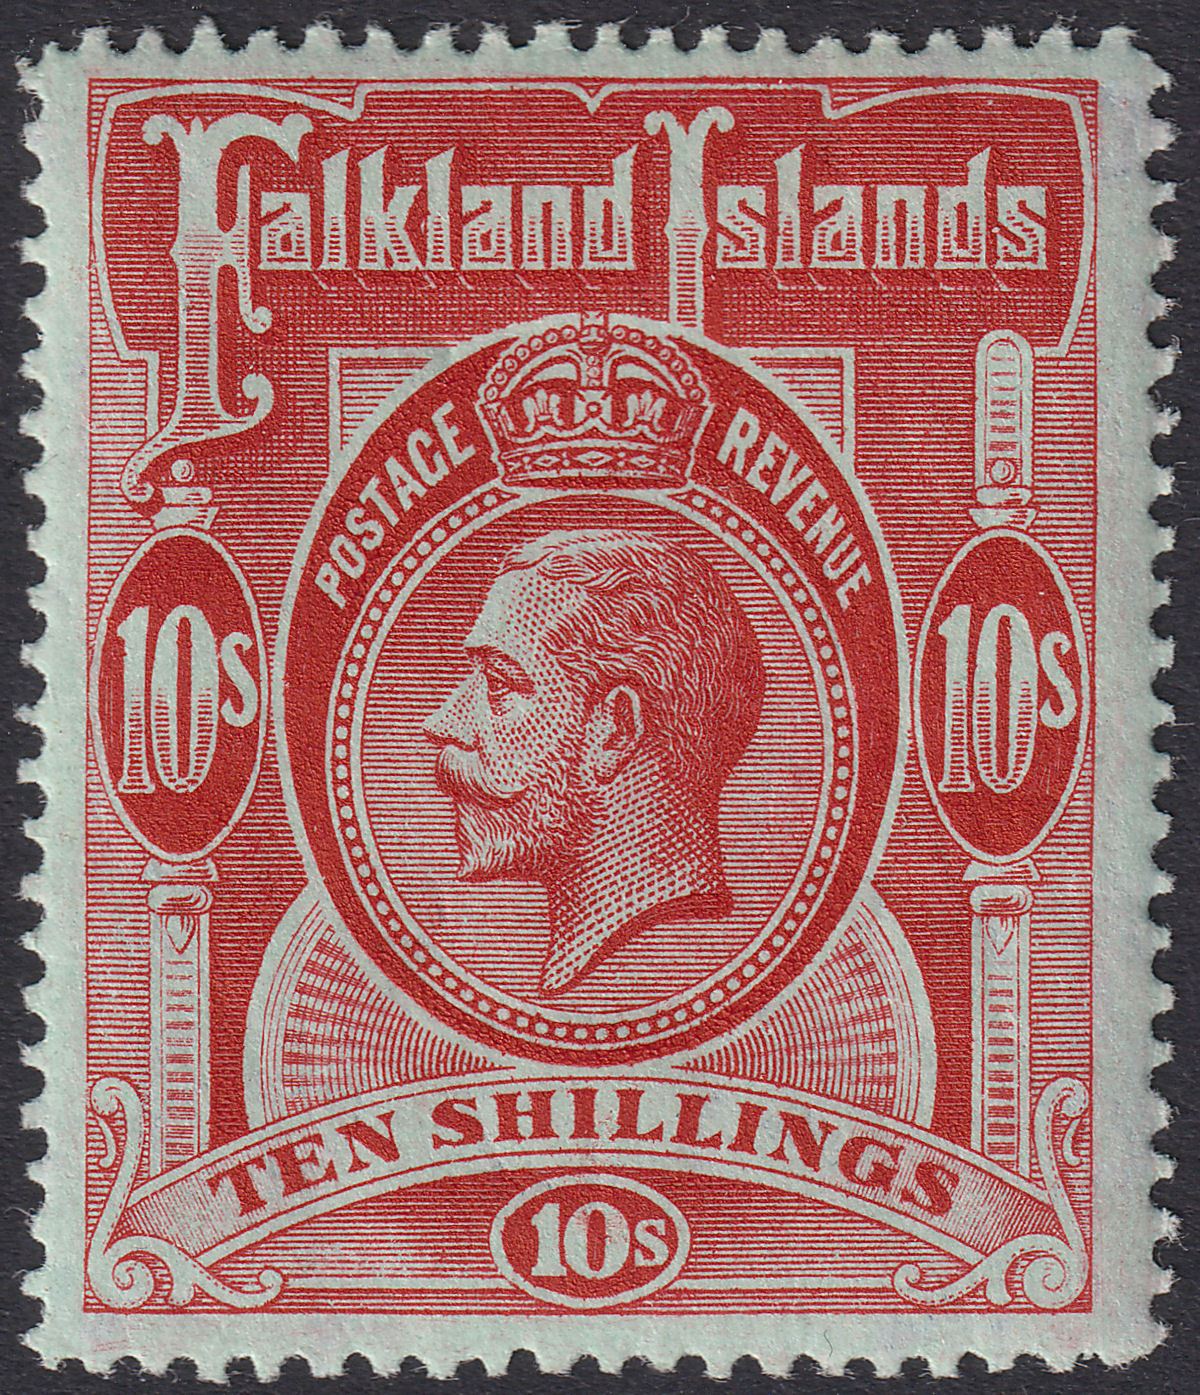 Falkland Islands 1914 KGV 10sh Red on Green Mint SG68 cat £200